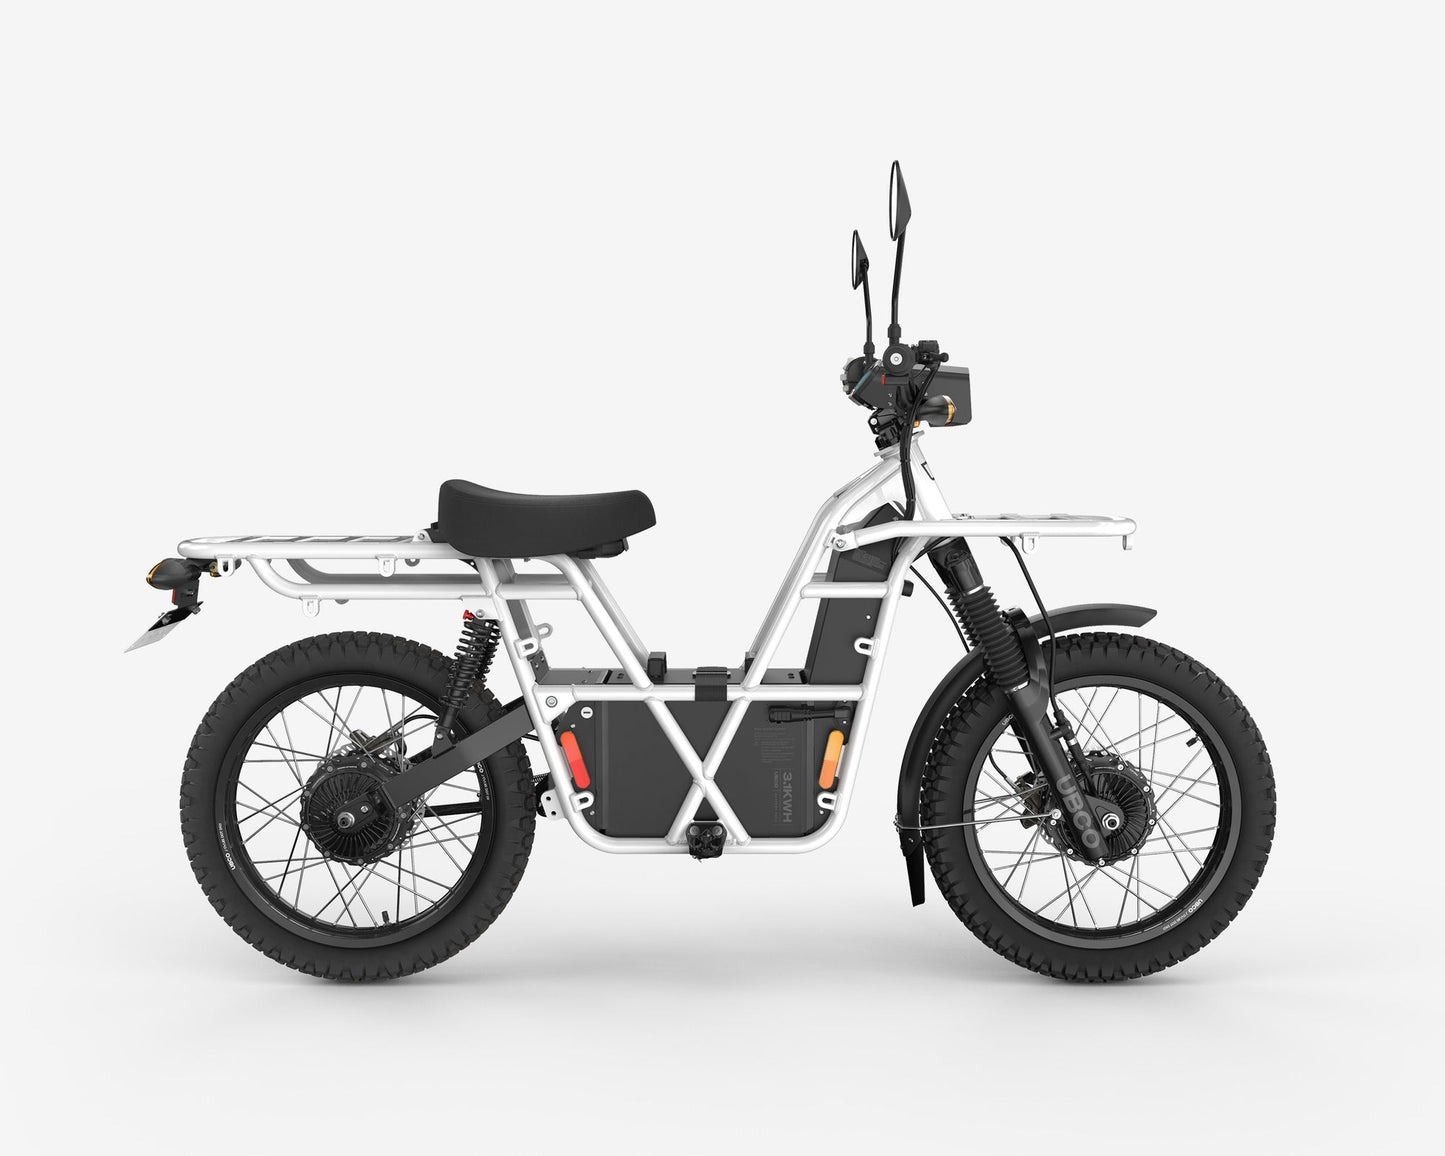 UBCO 2x2 Adventure Bike